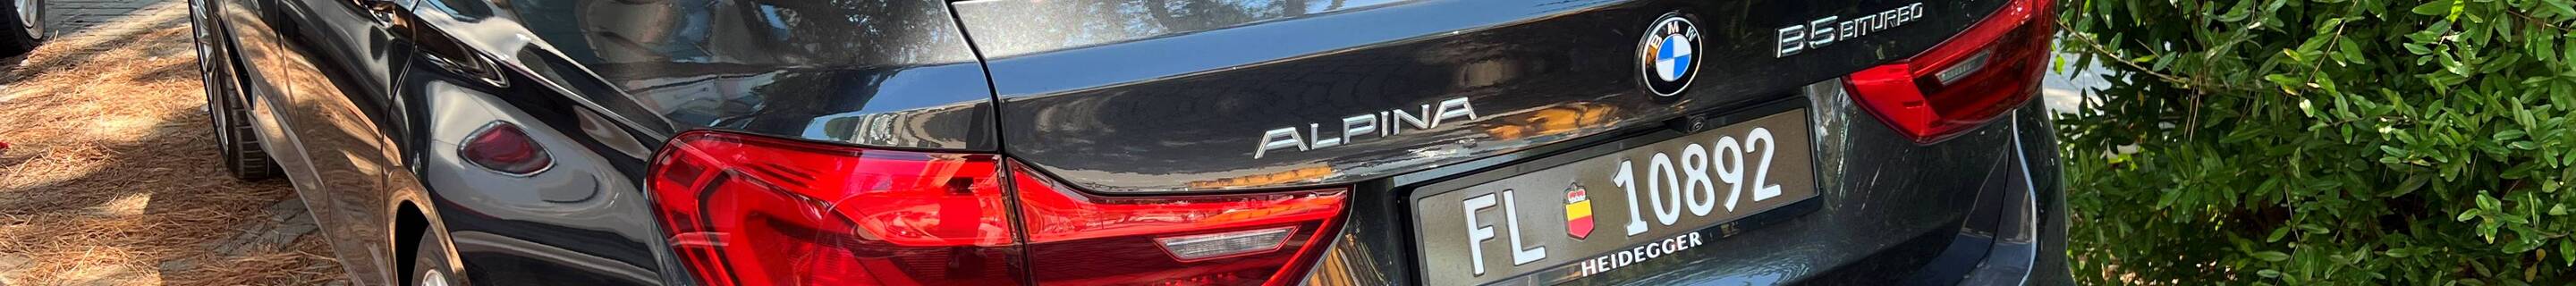 Alpina B5 BiTurbo Touring 2017